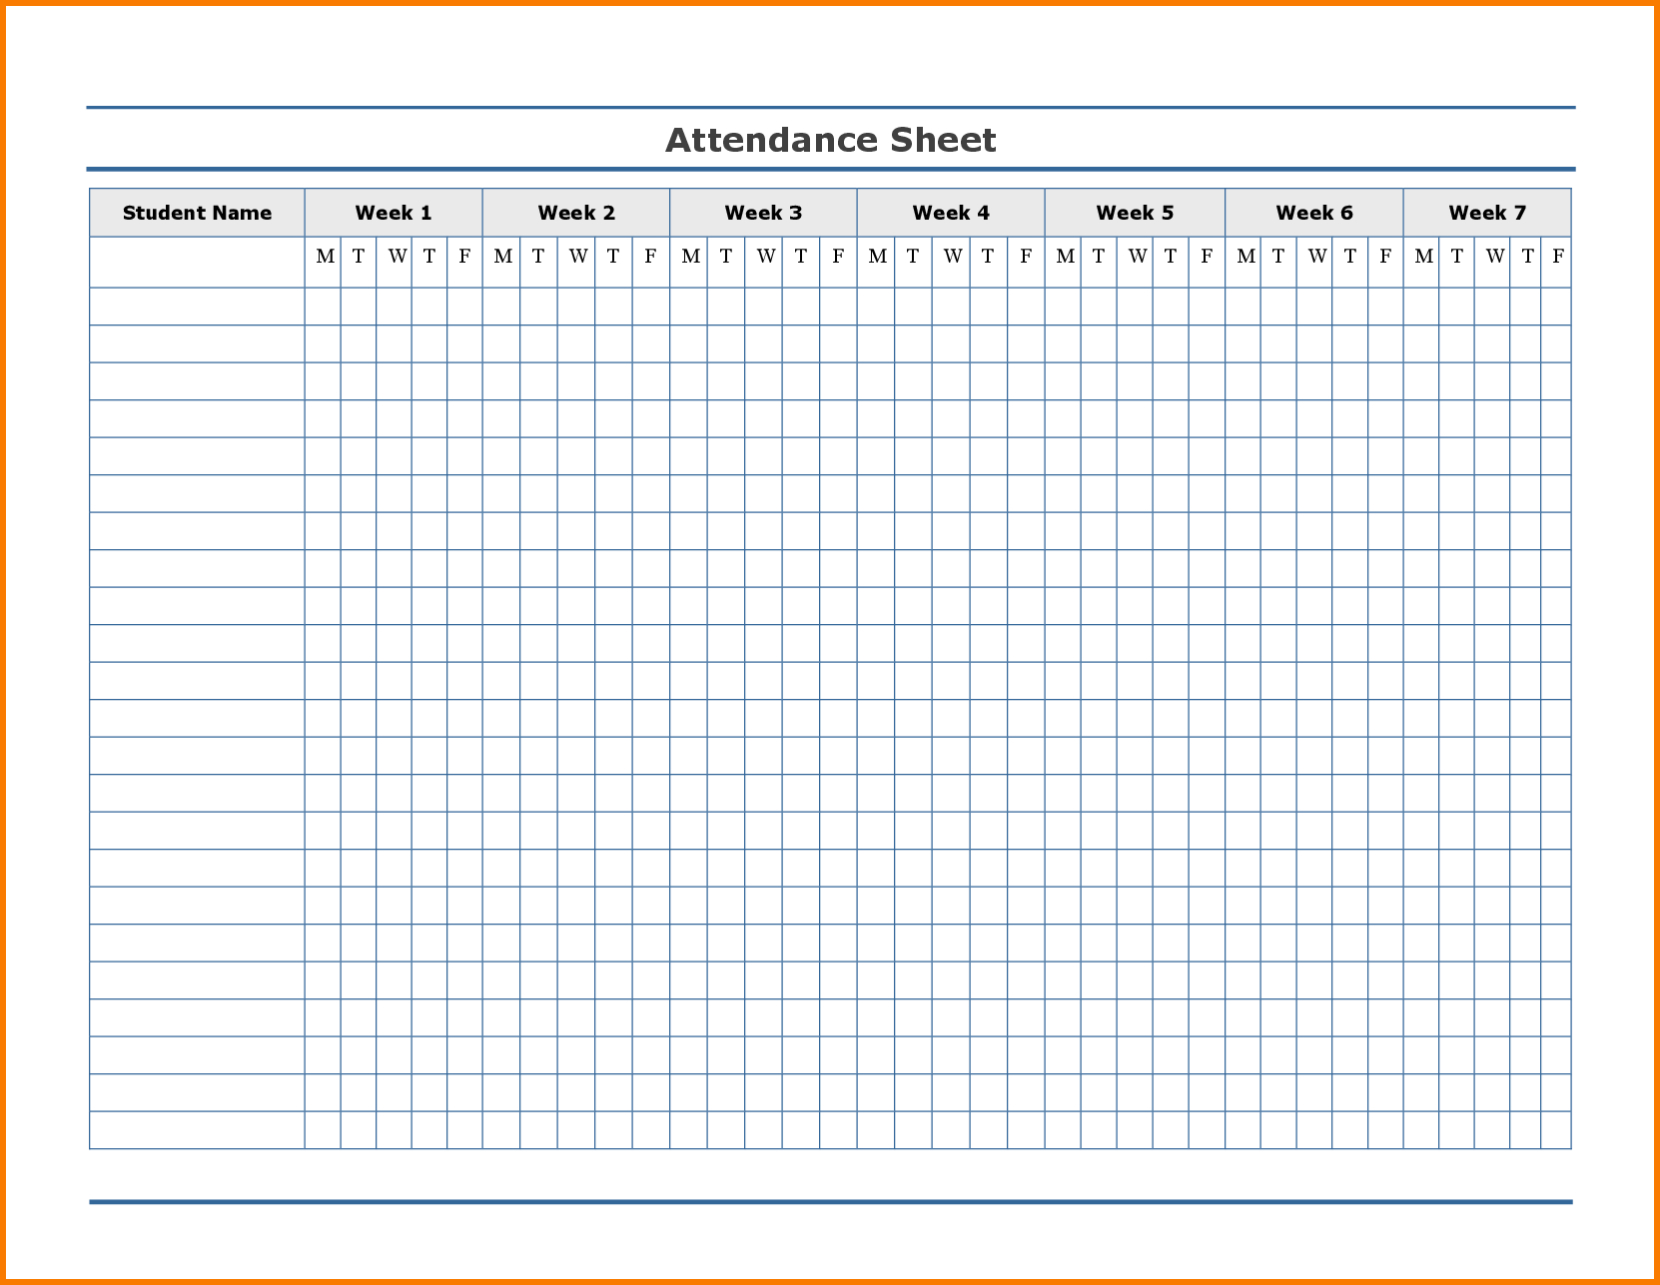 Employee Attendance Record Sheet Printable | Attendance with regard to Free Printable 2020 Employee Attendance Calendar